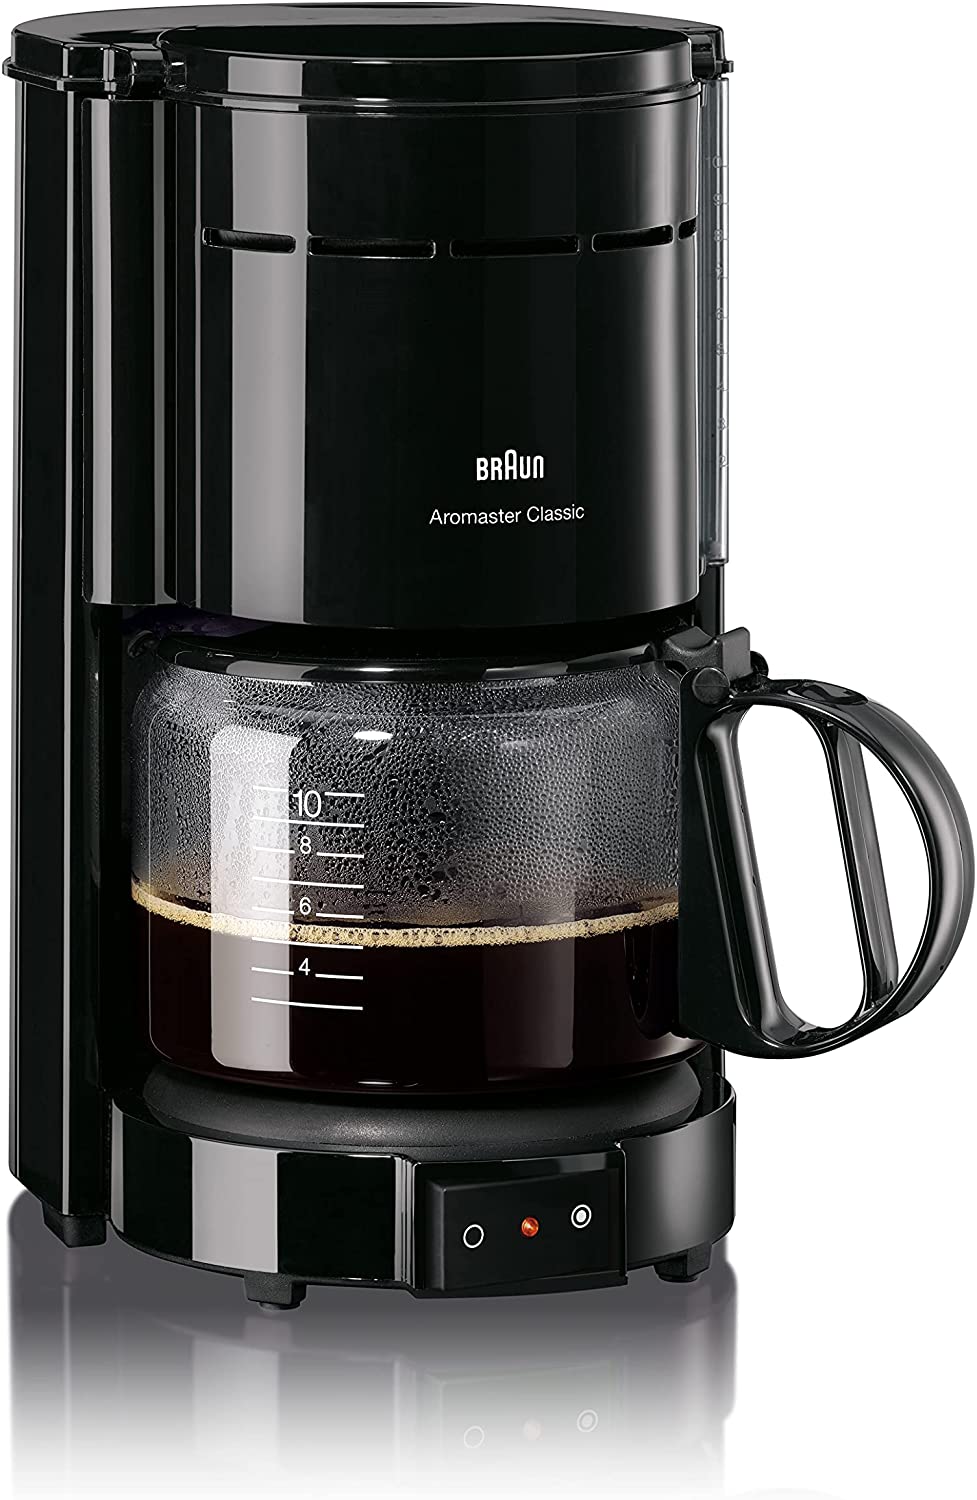 DeLonghi Braun automatic coffee maker Aromaster KF 47 plus - Black